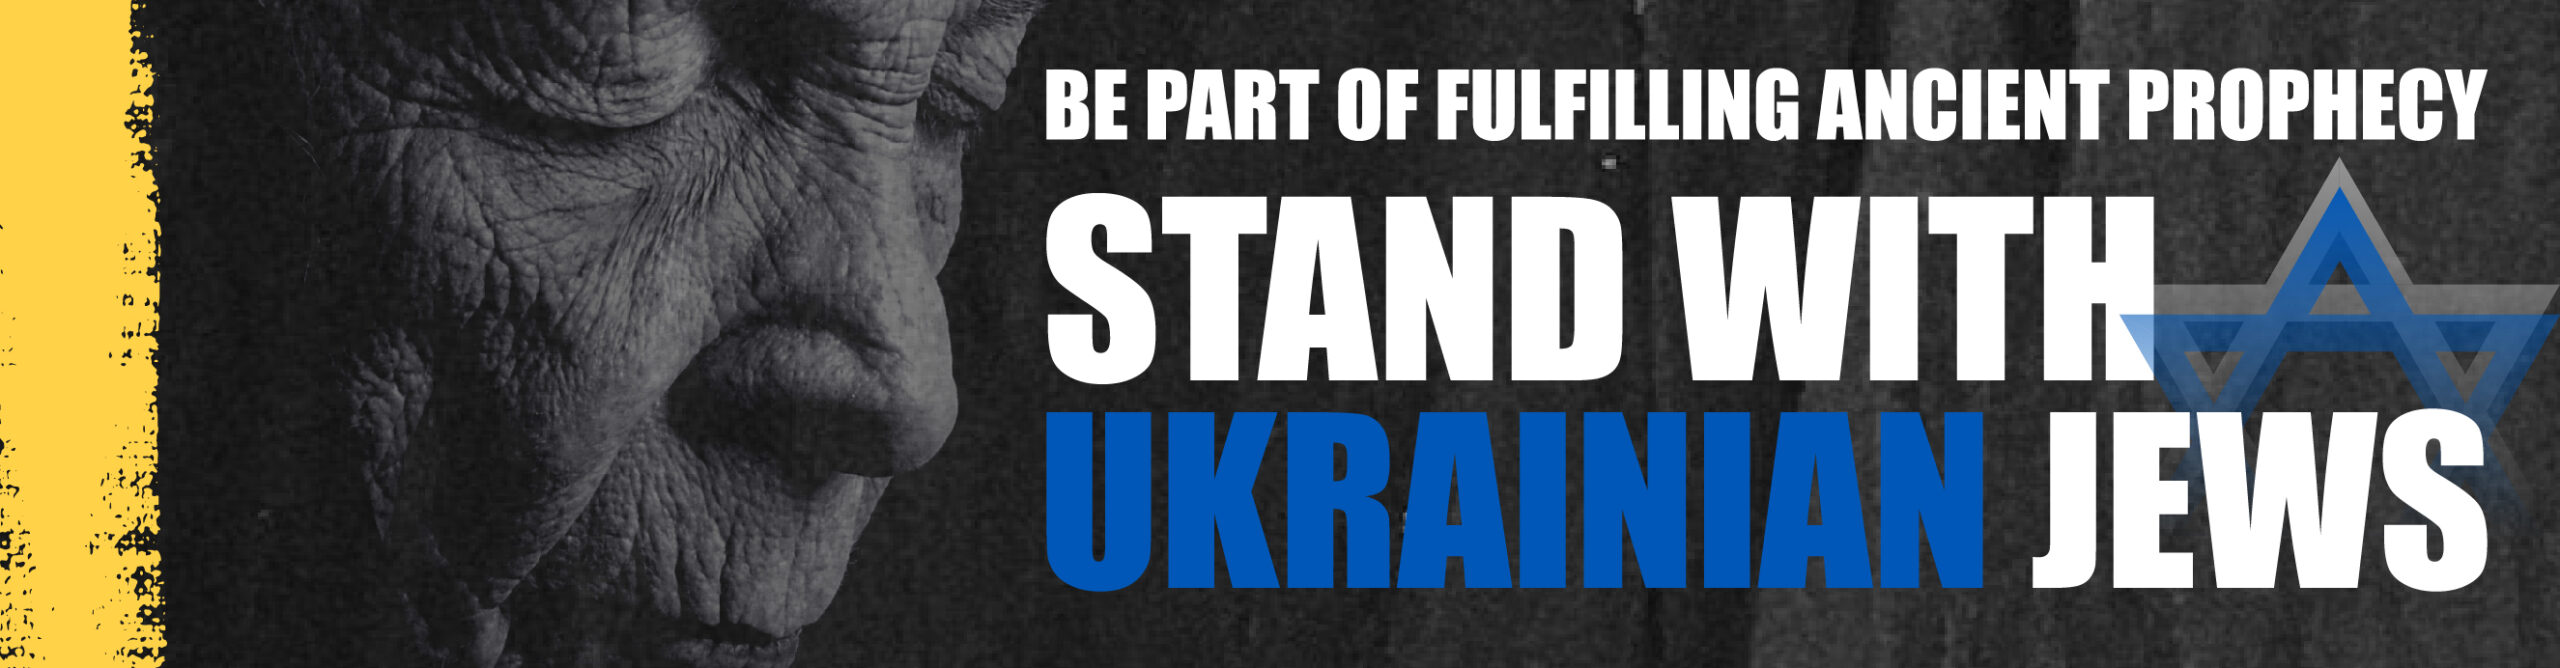 Ukraine campaign